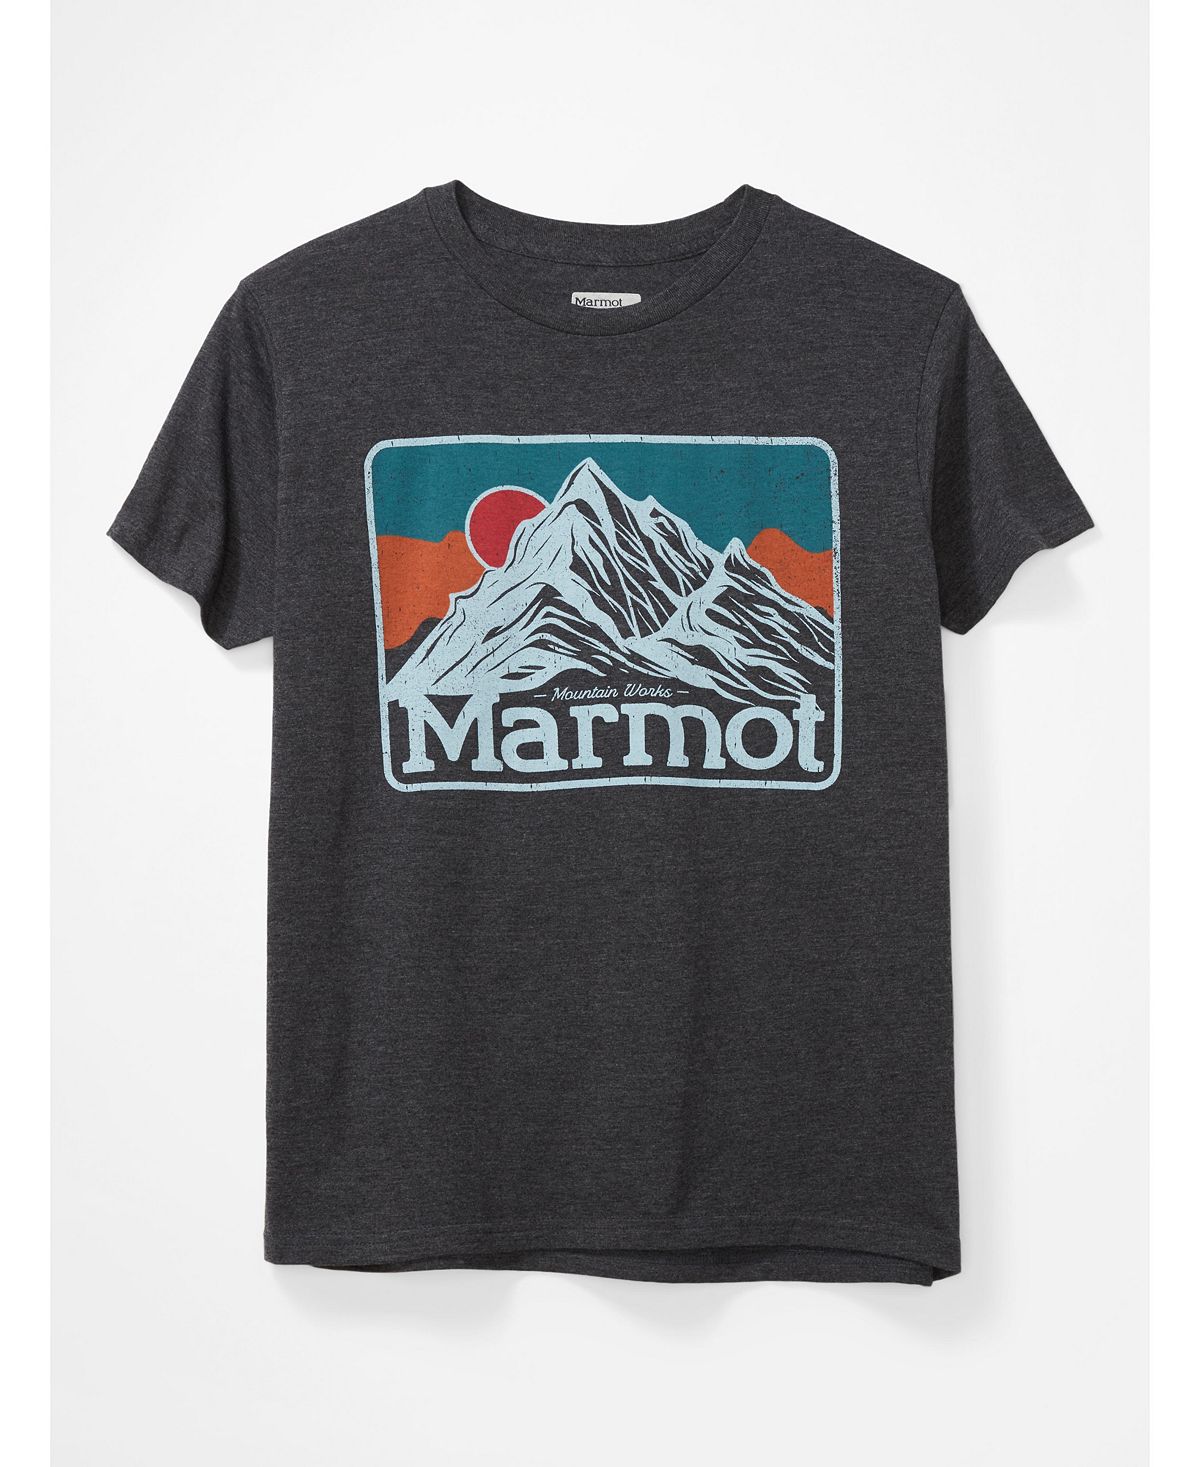 Marmot Mountain Peaks Tee Short Sleeve Charcoal Heather